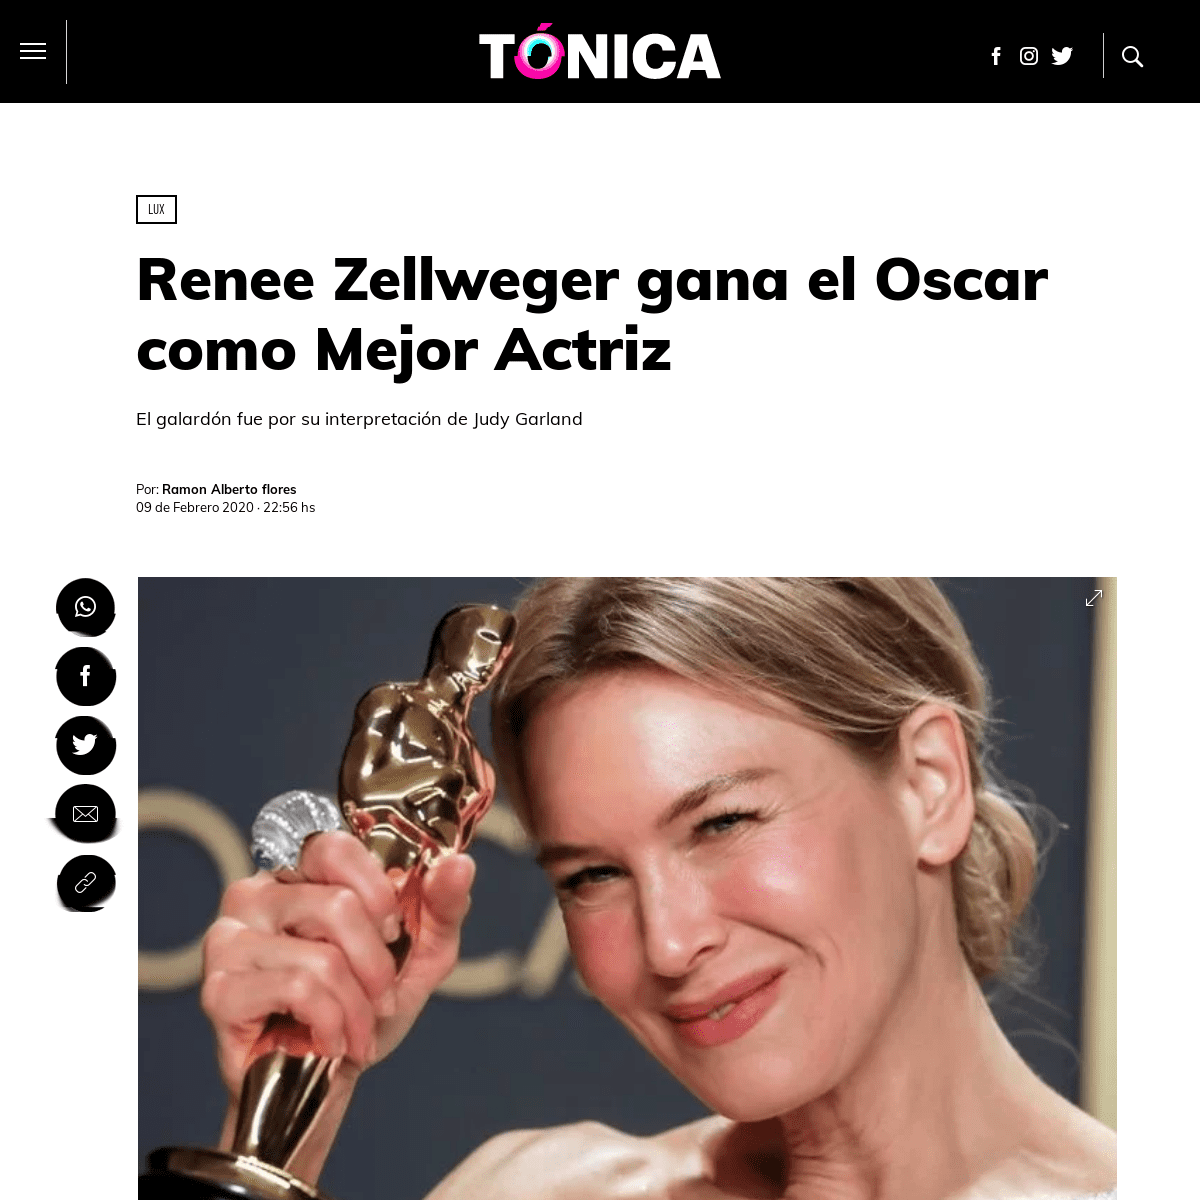 A complete backup of www.tonica.la/lux/Renee-Zellweger-gana-el-Oscar-como-Mejor-Actriz-20200209-0020.html